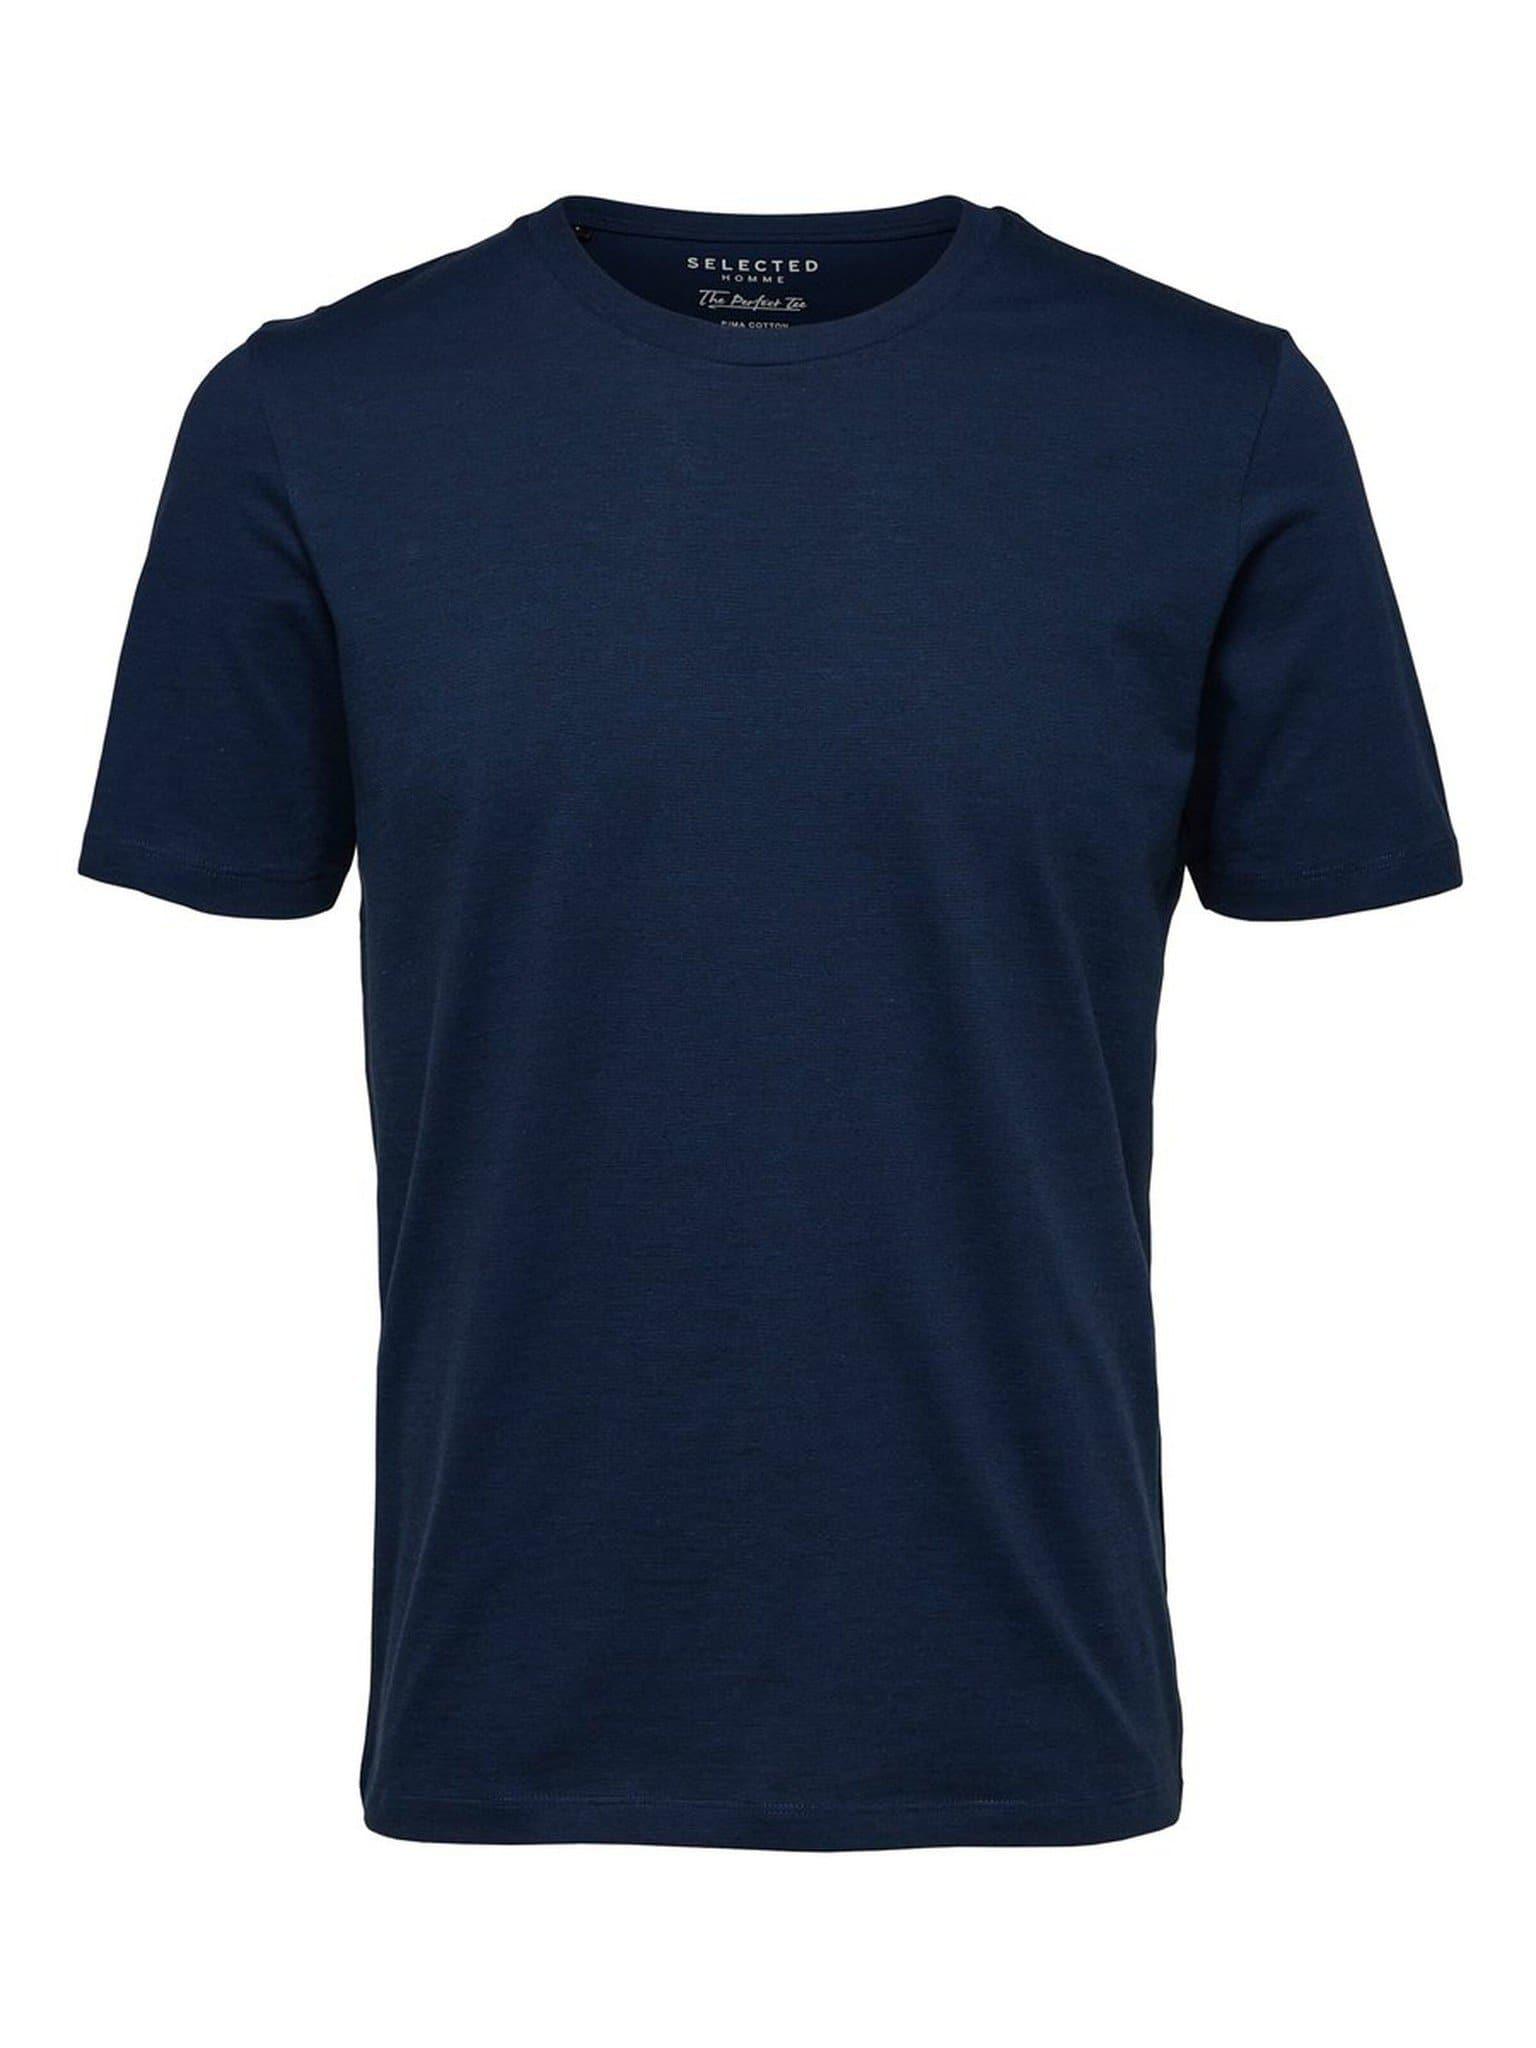 Laflamme- T-shirt marine - Selected